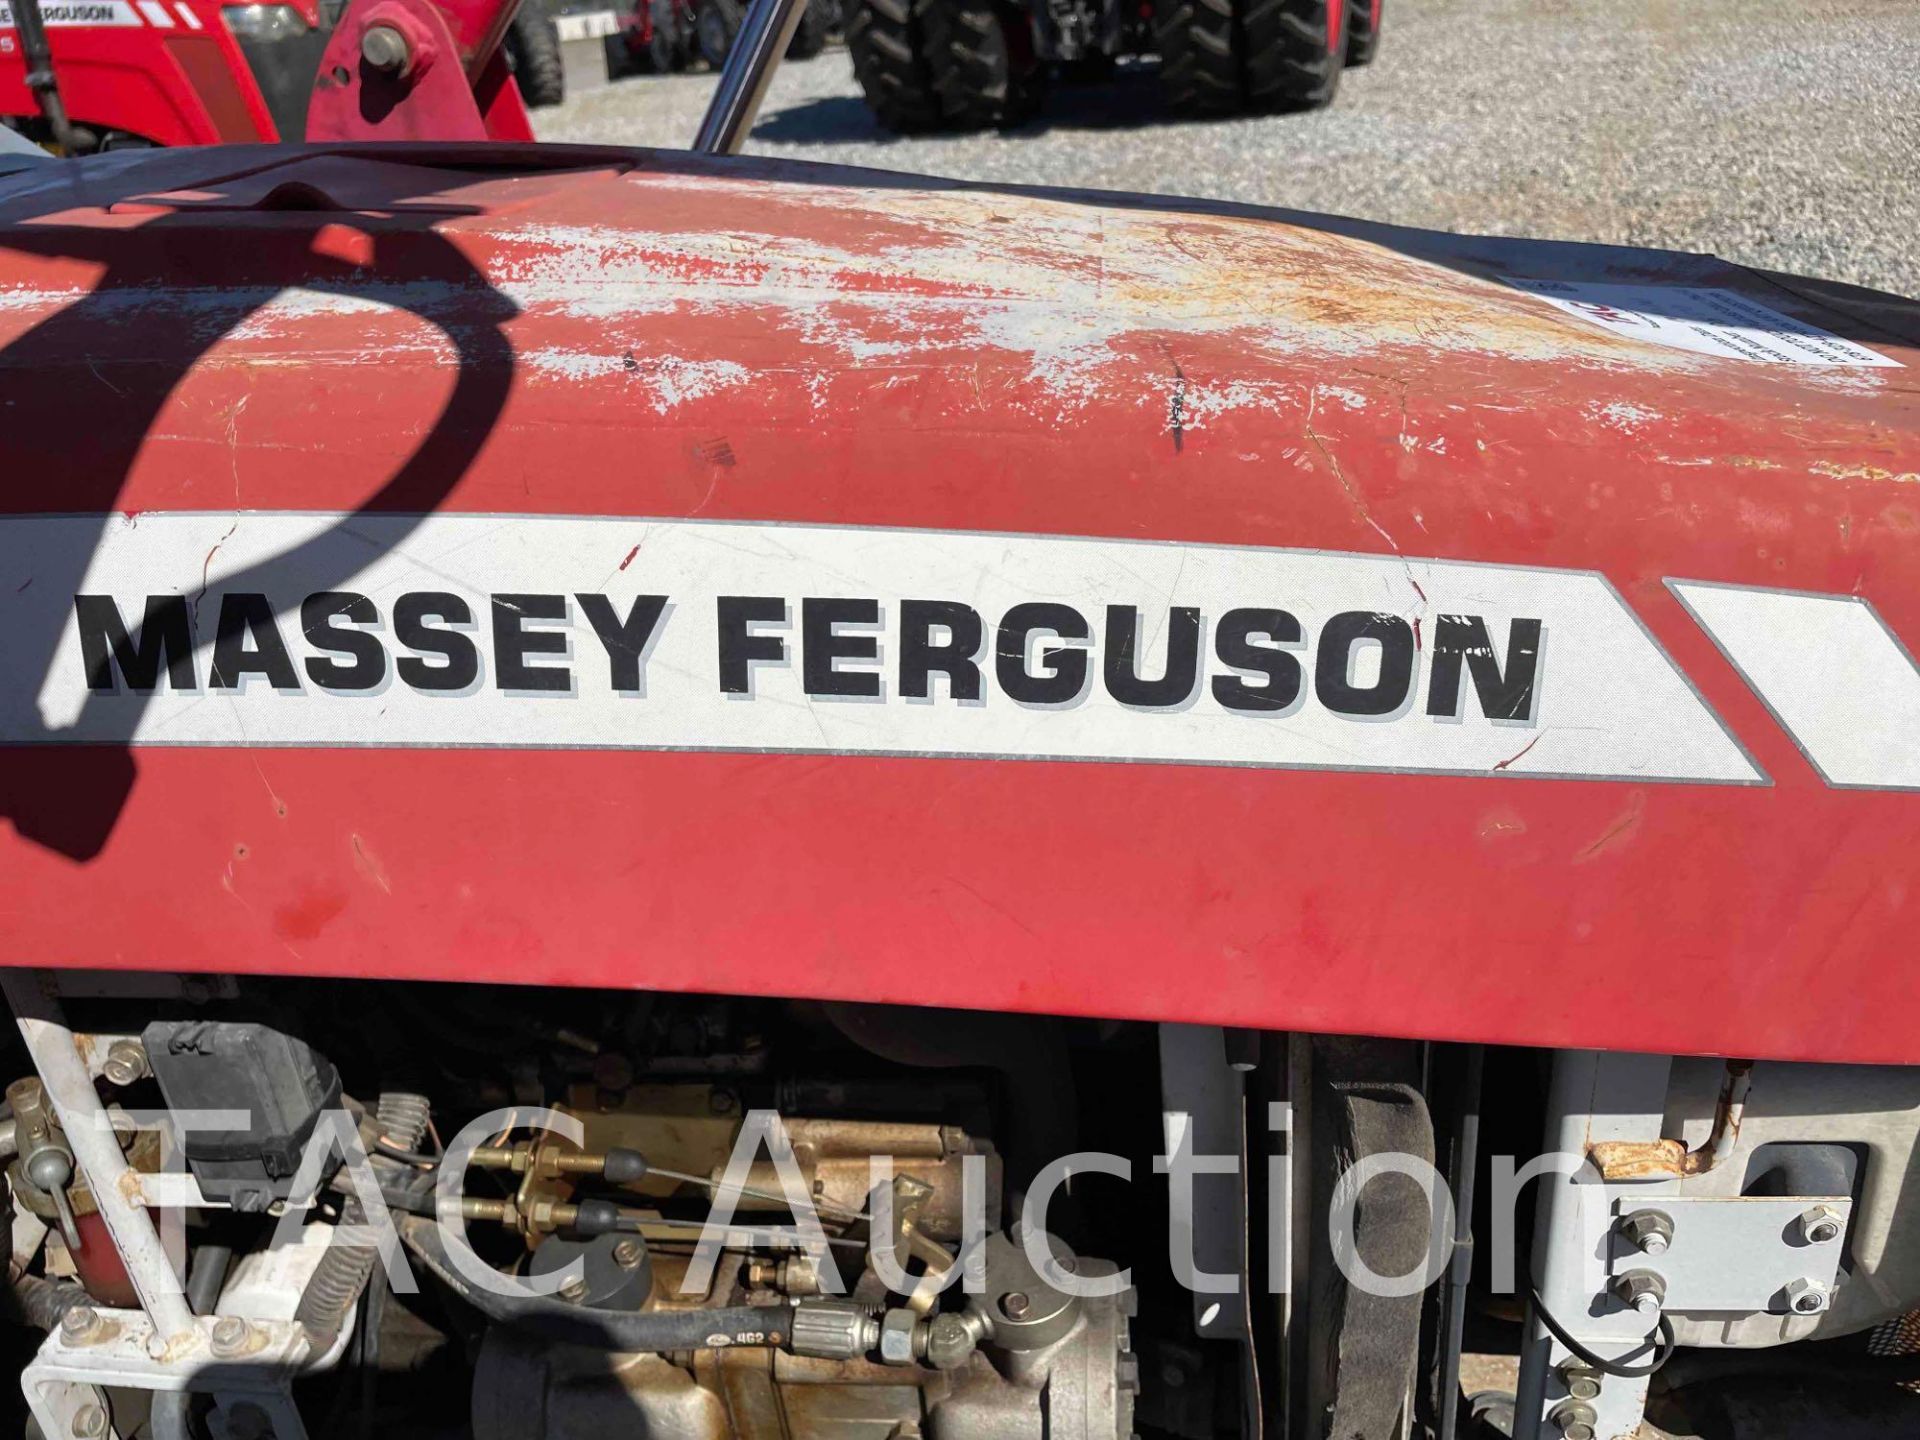 Massey Ferguson 1528 Tractor W/ Front End Loader - Image 39 of 44